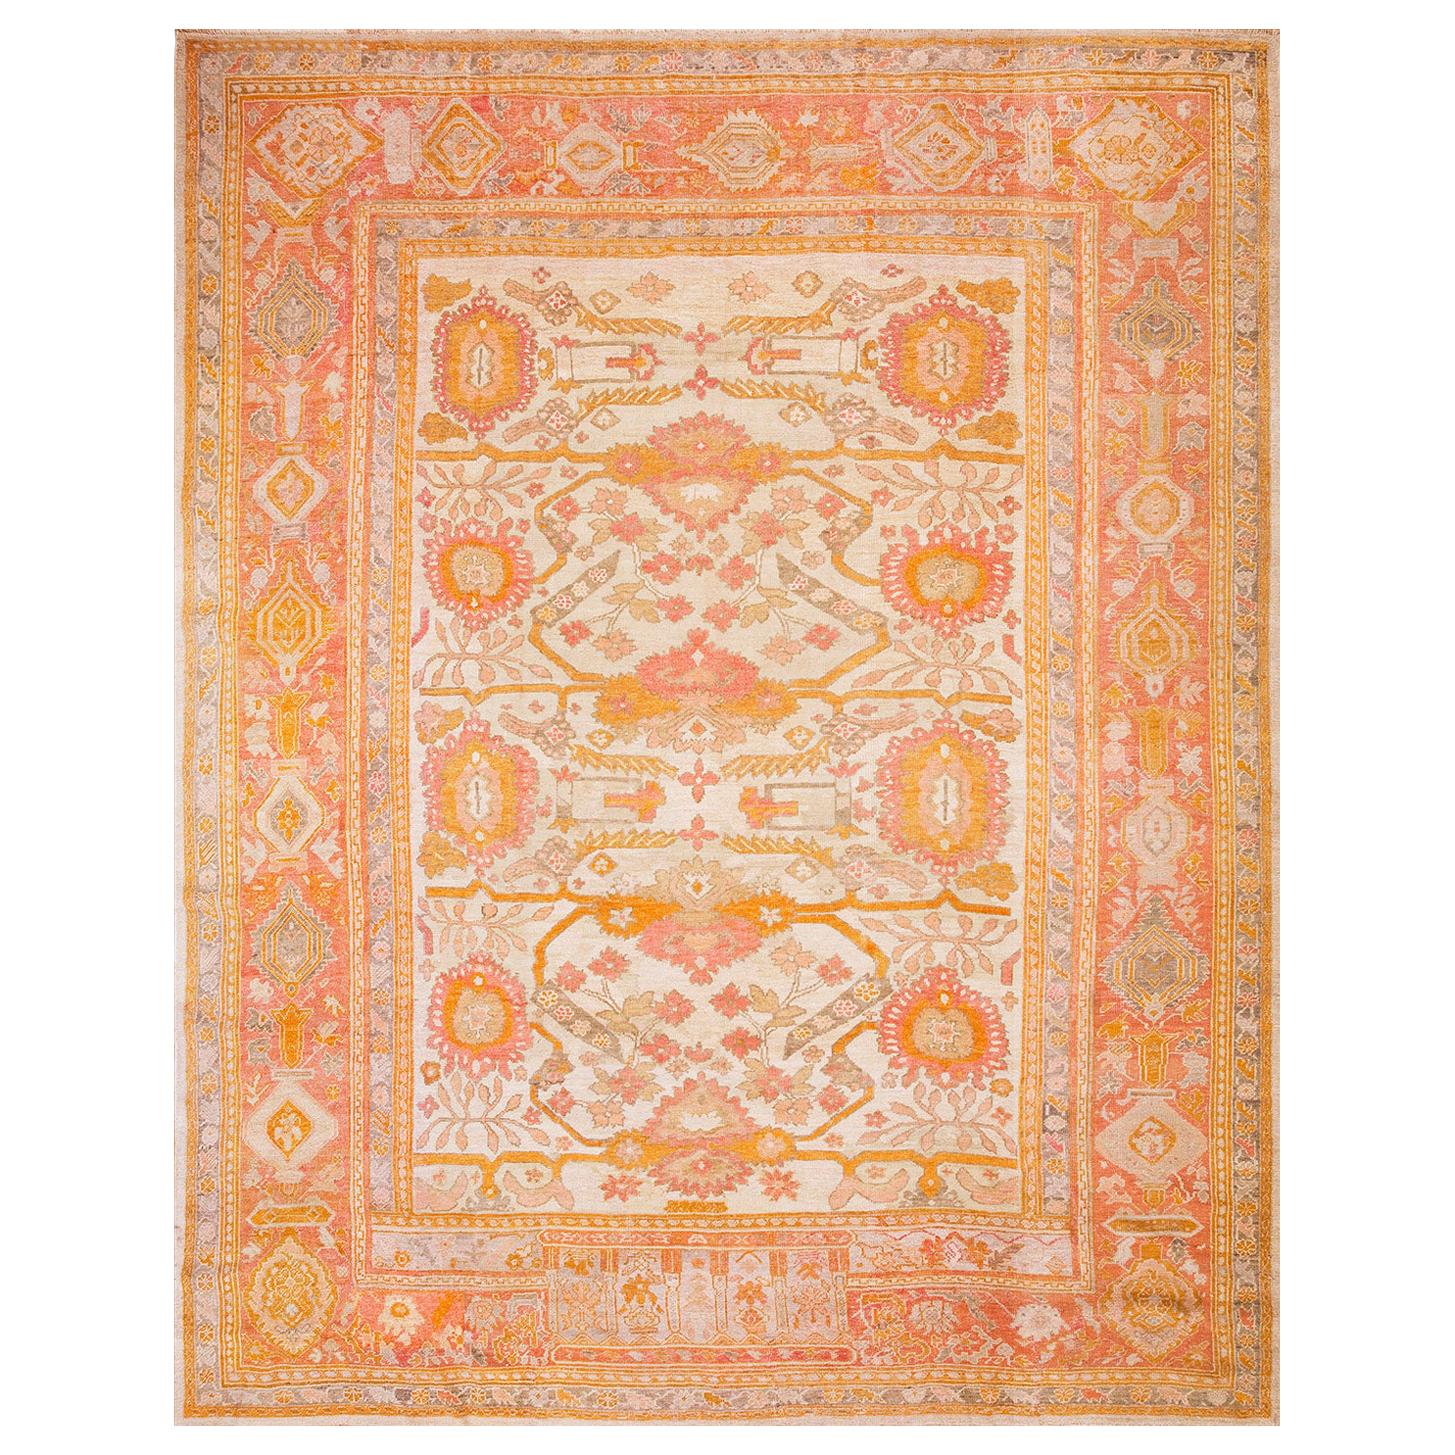 19th Century Turkish Oushak Carpet ( 10'6" x 13'5" - 320 x 415 ) For Sale